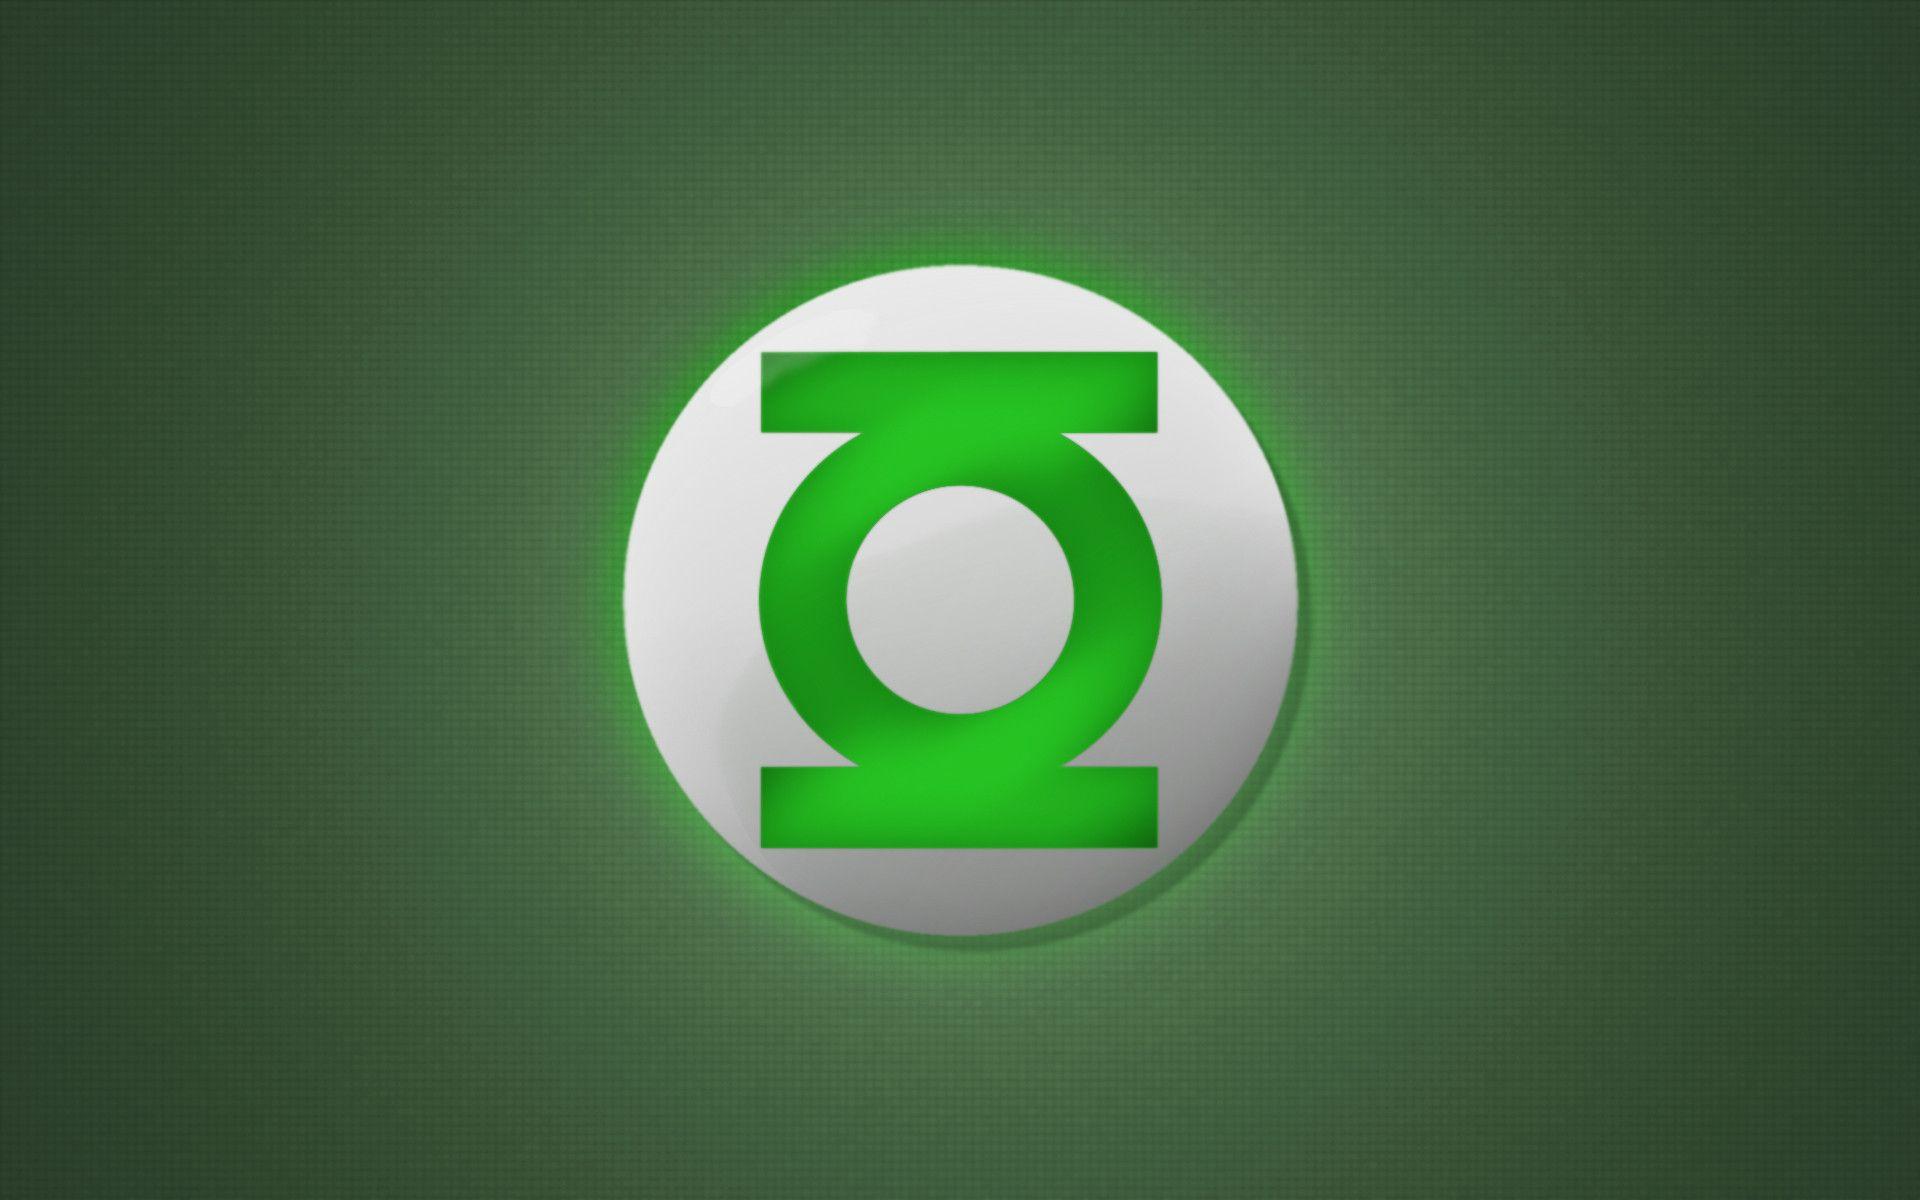 Wallpaper For > Green Lantern Logo Wallpaper